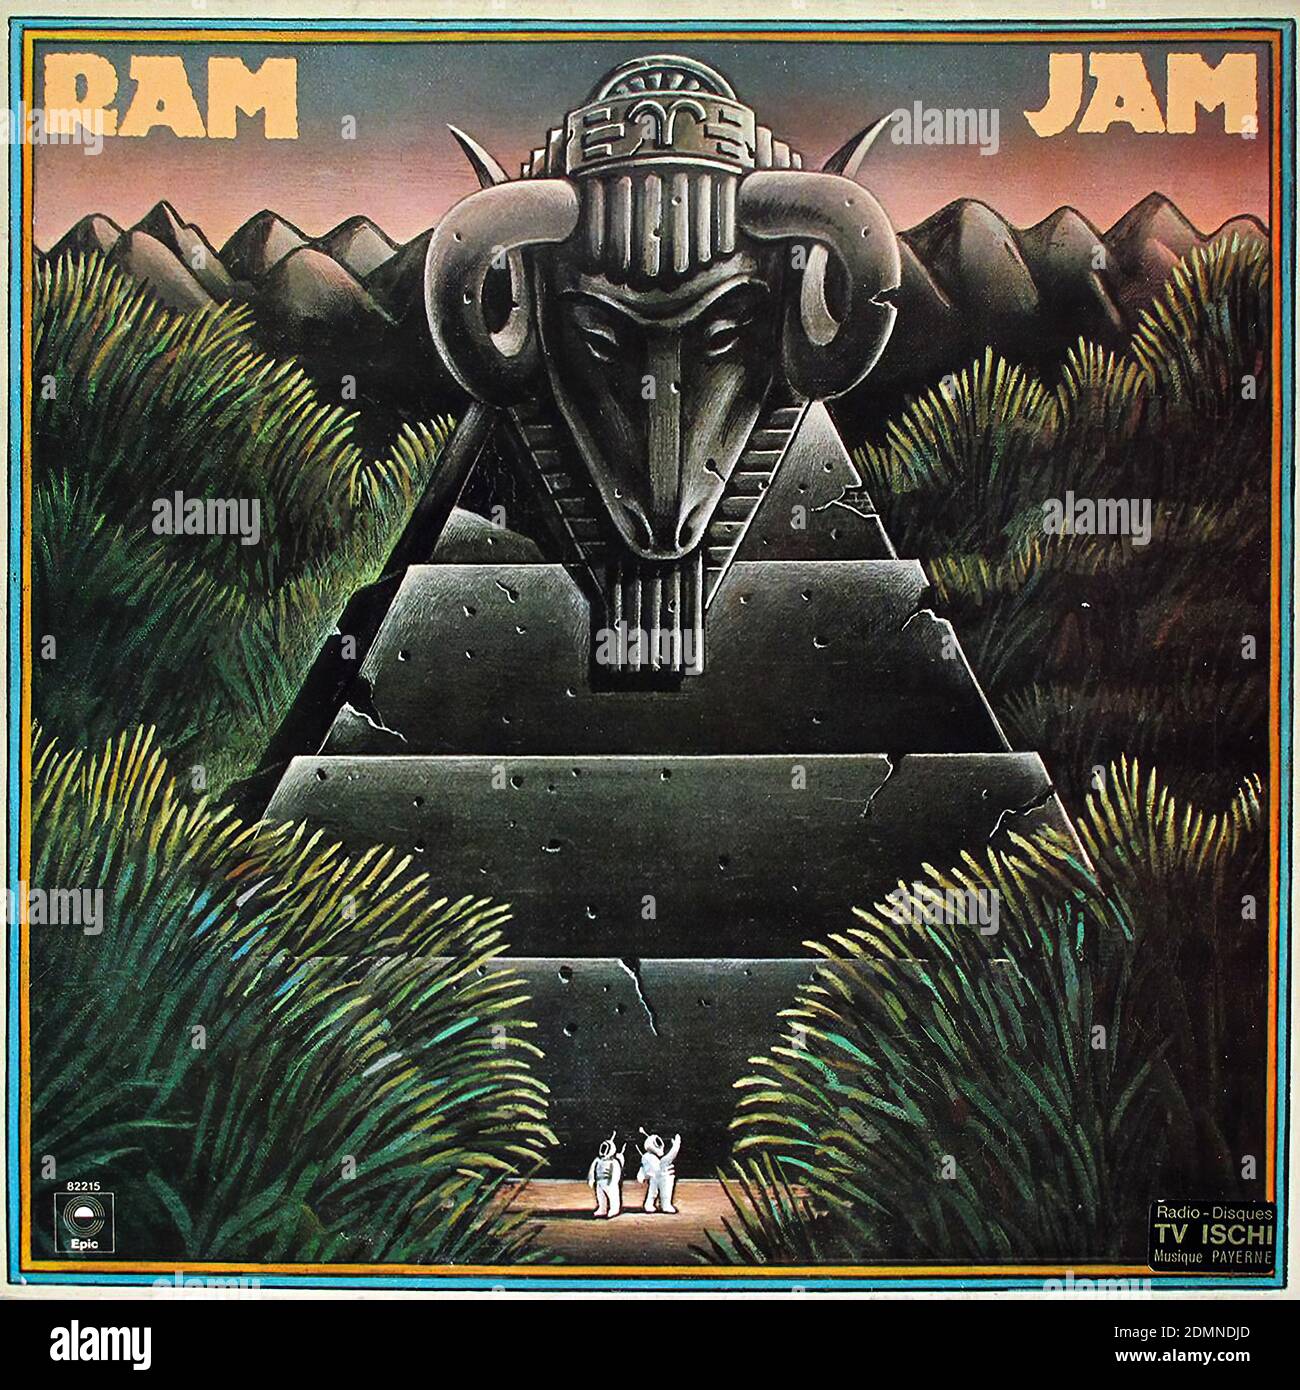 RAM JAM SELF TITLED BLACK BETTY 12 LP - Vintage Vinyl Record Cover Foto  stock - Alamy